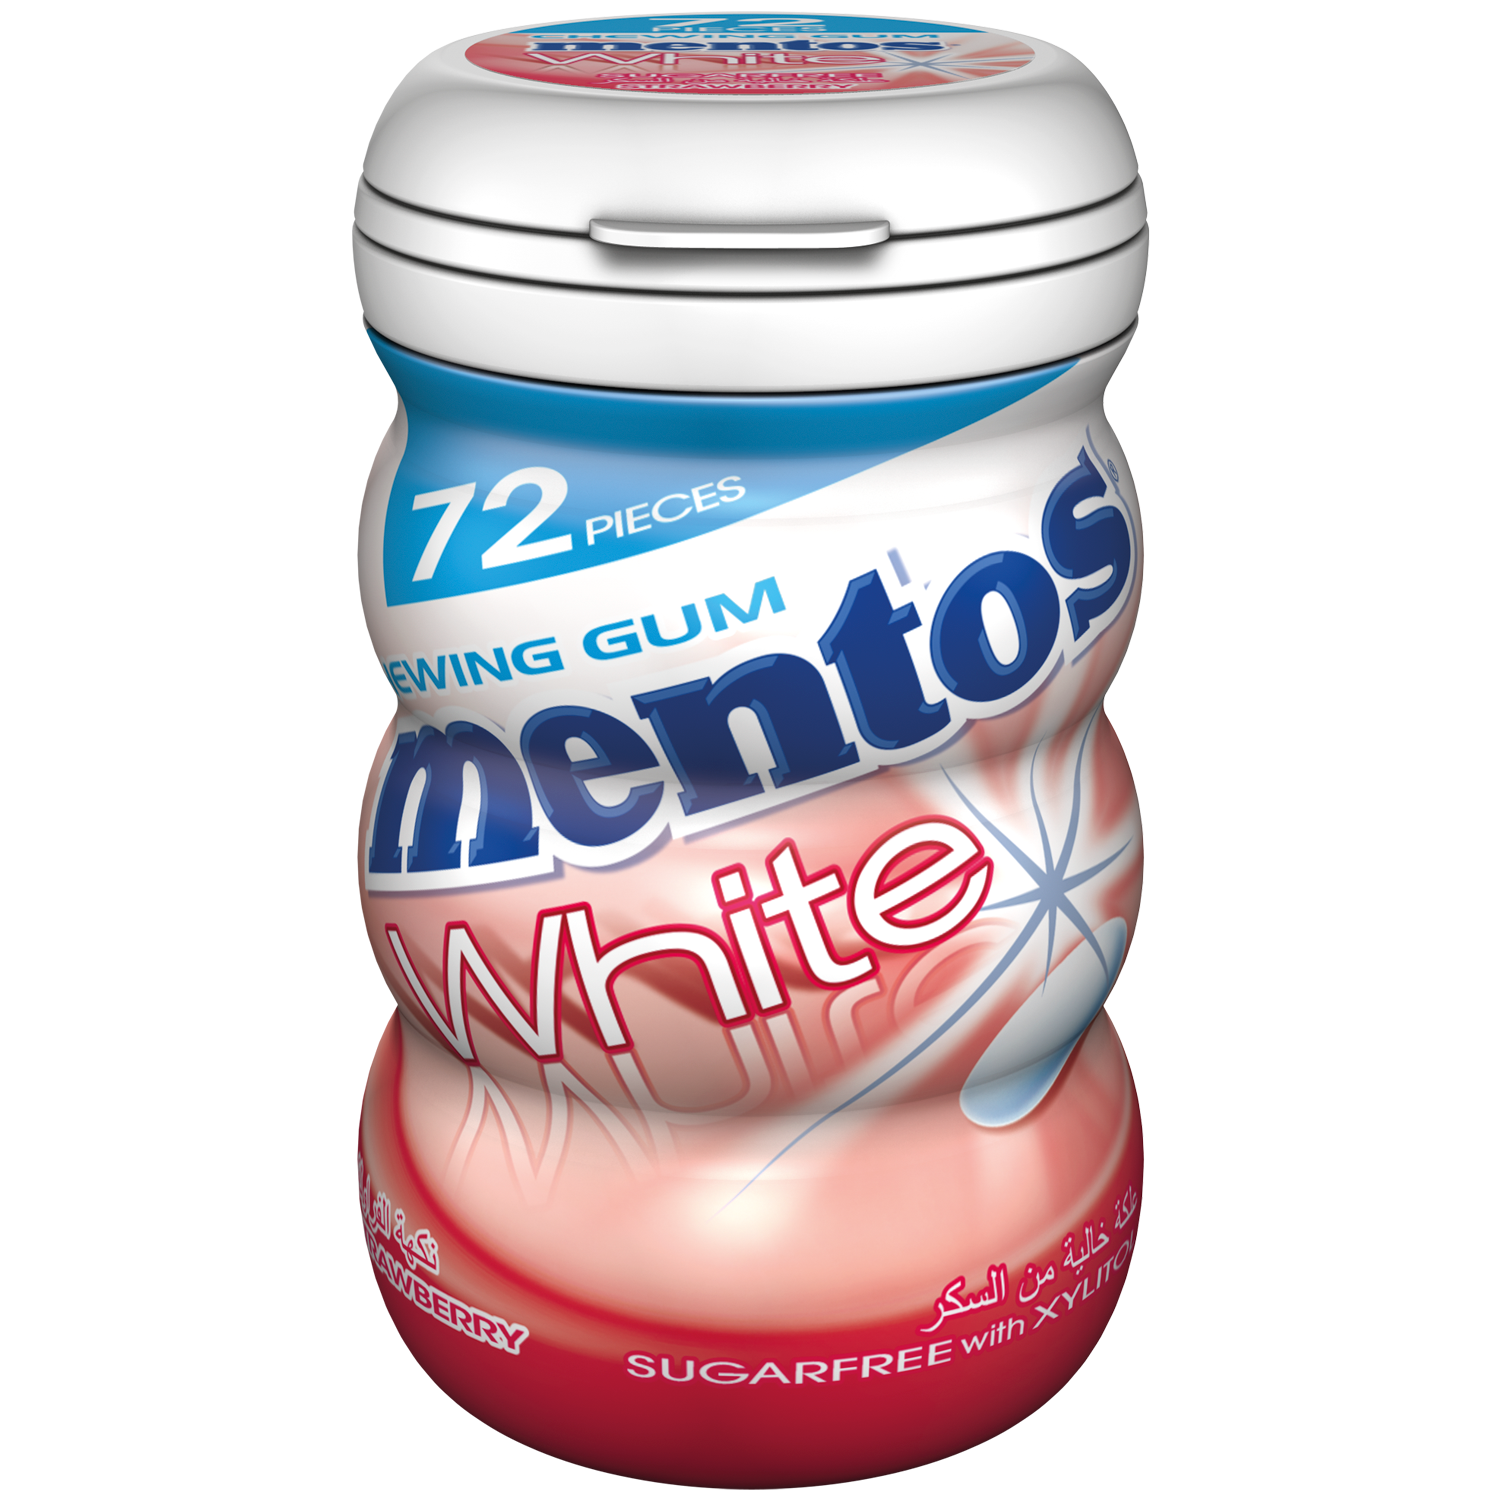 Mentos Gum white Strawberry 72 pieces bottle